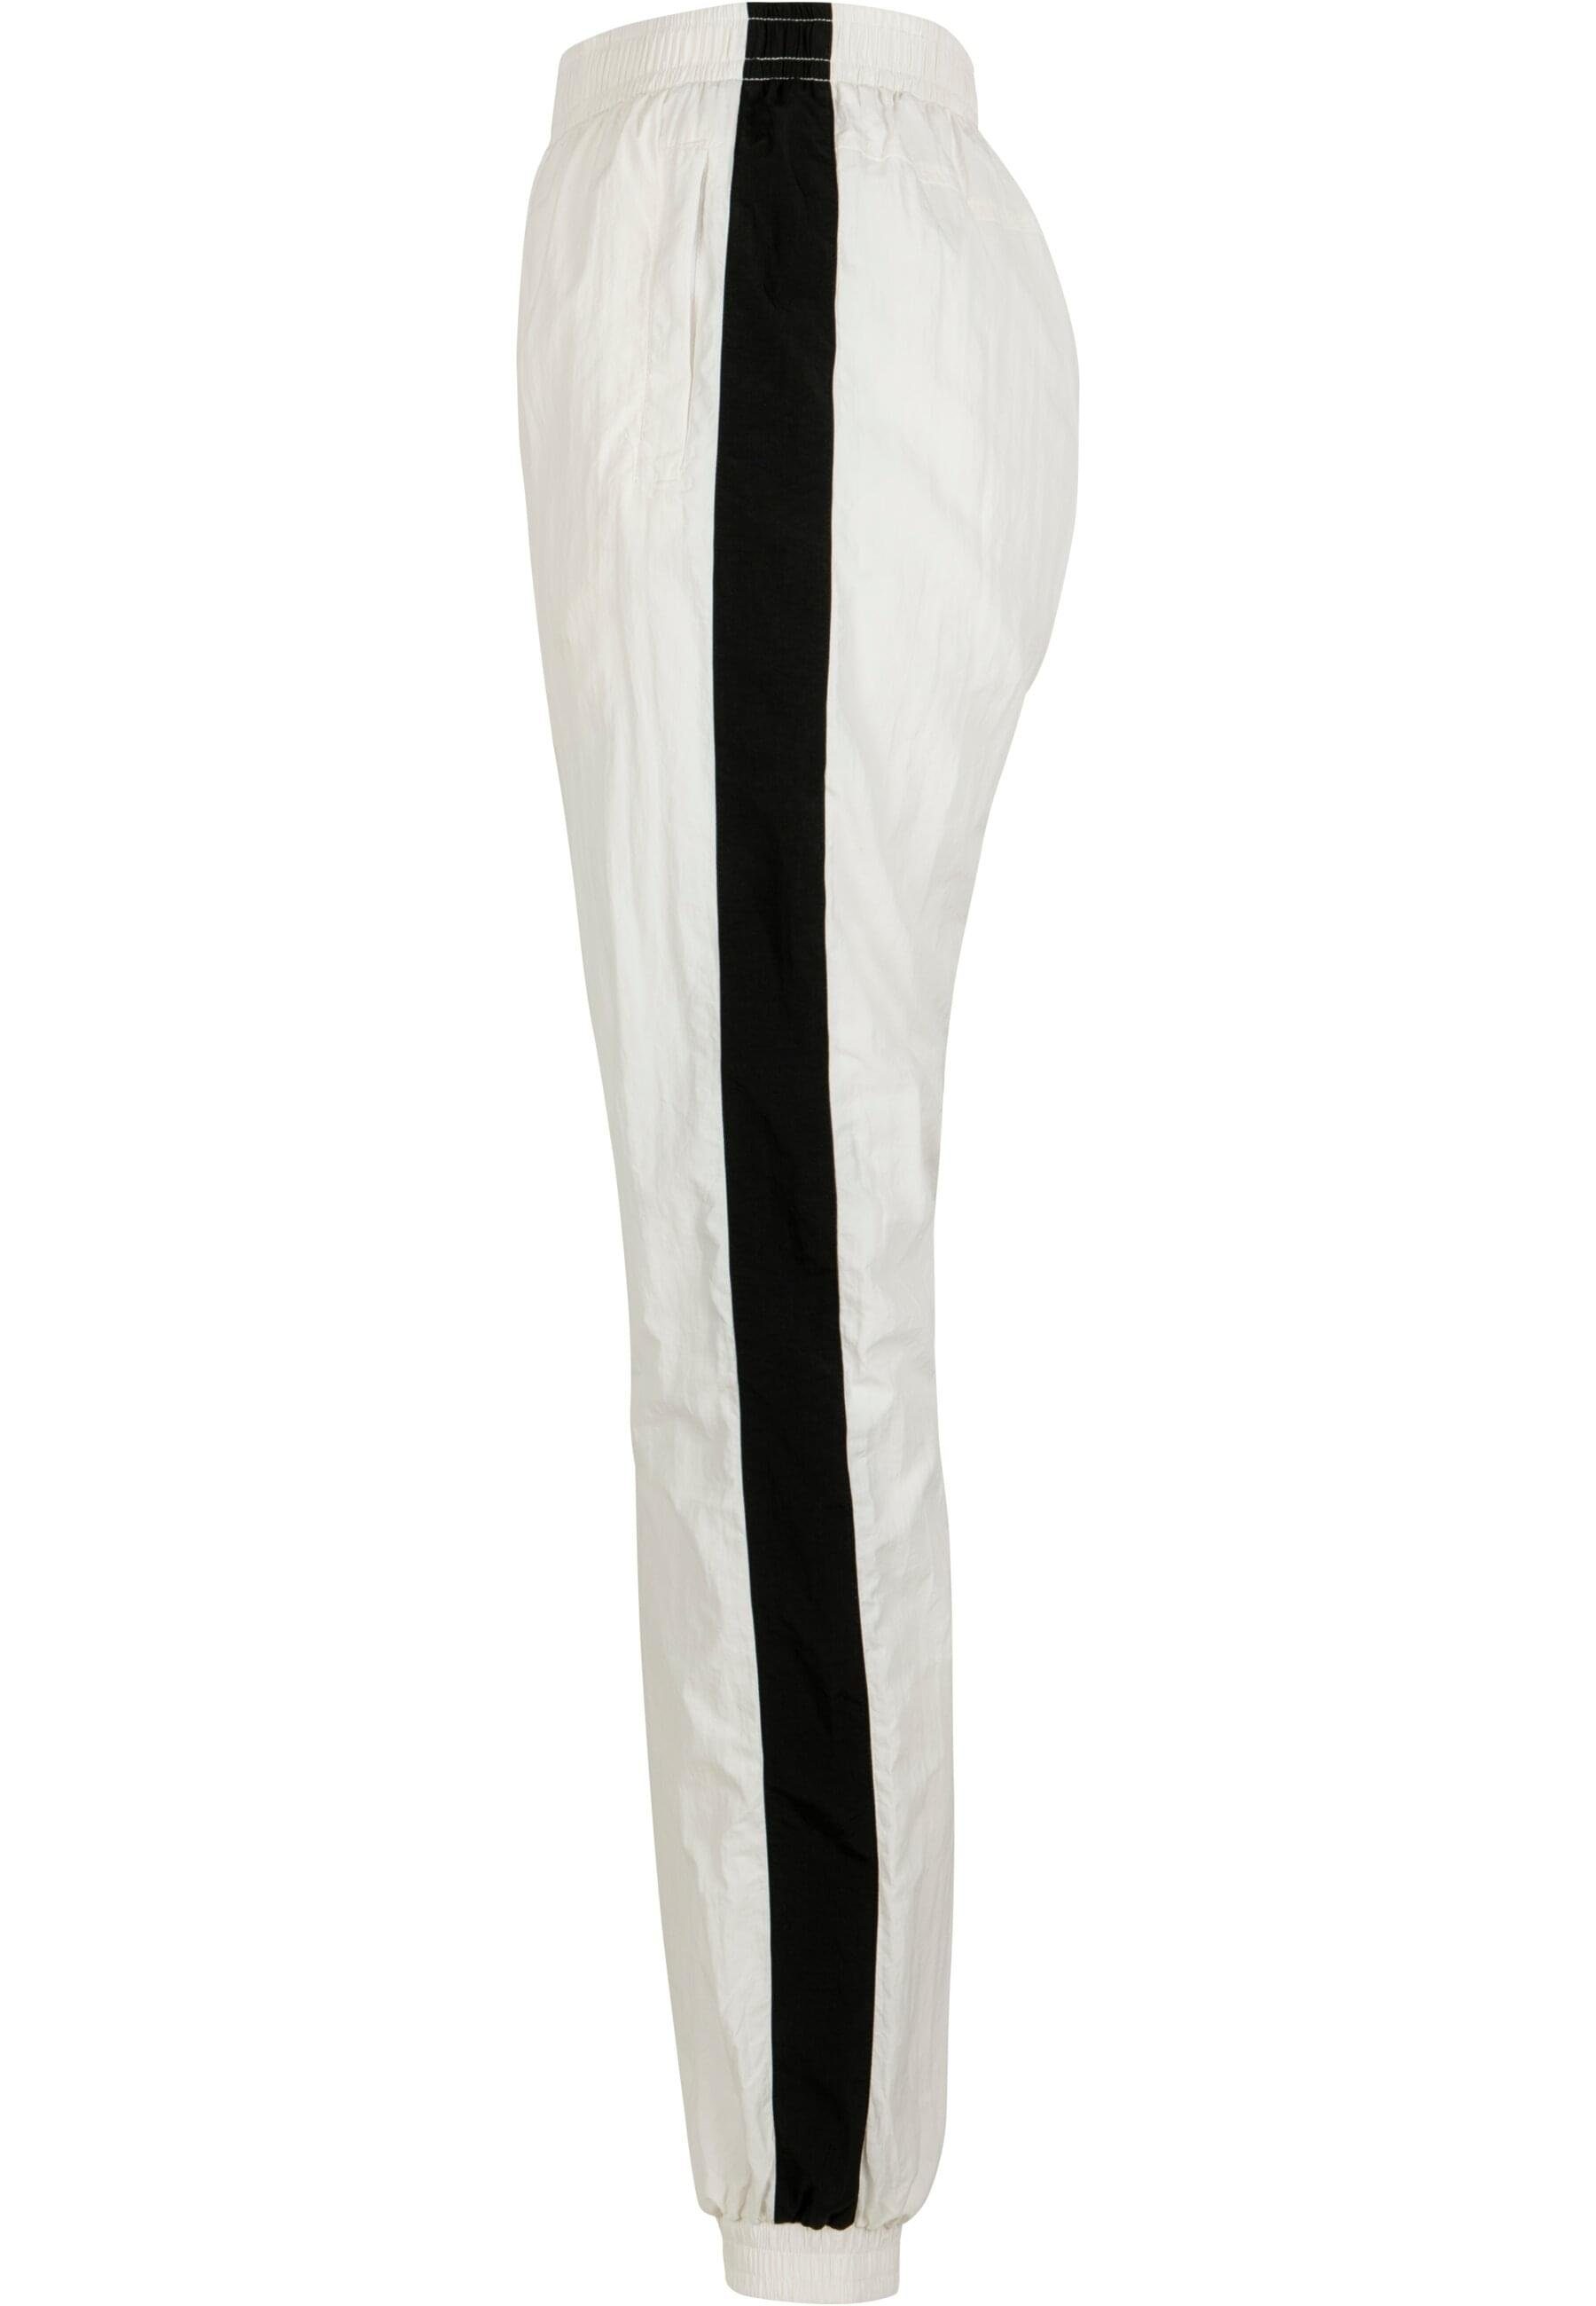 URBAN CLASSICS Stoffhose Damen Striped Ladies Pants (1-tlg) white/black Crinkle